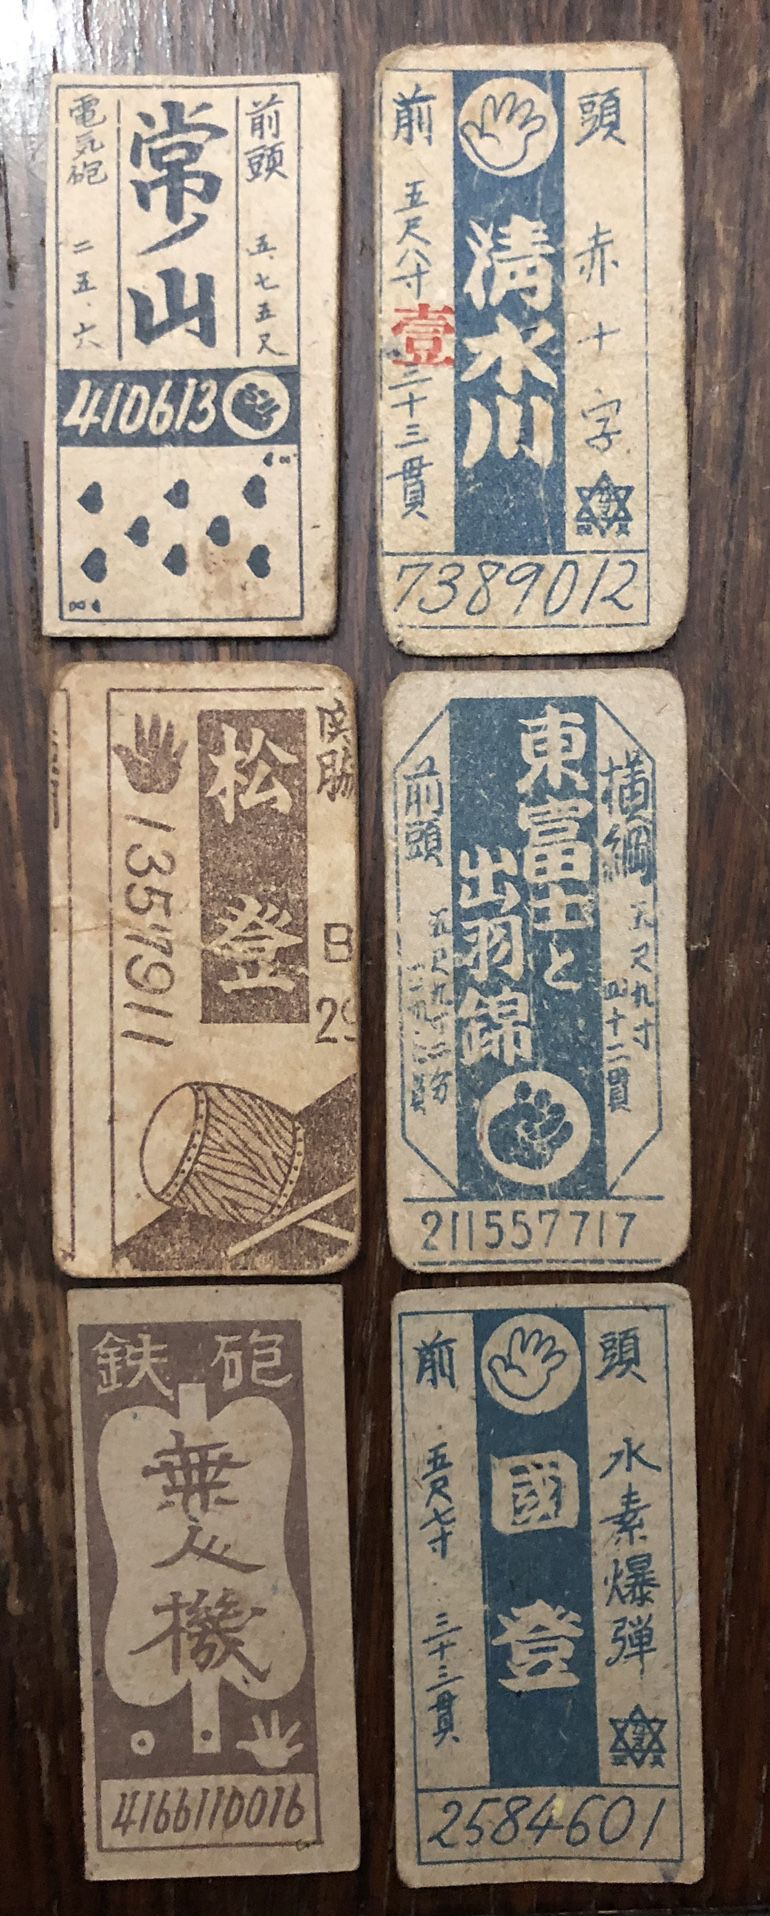 Six Card Lot 1954 Japanese Menko Sumo Wrestlers 